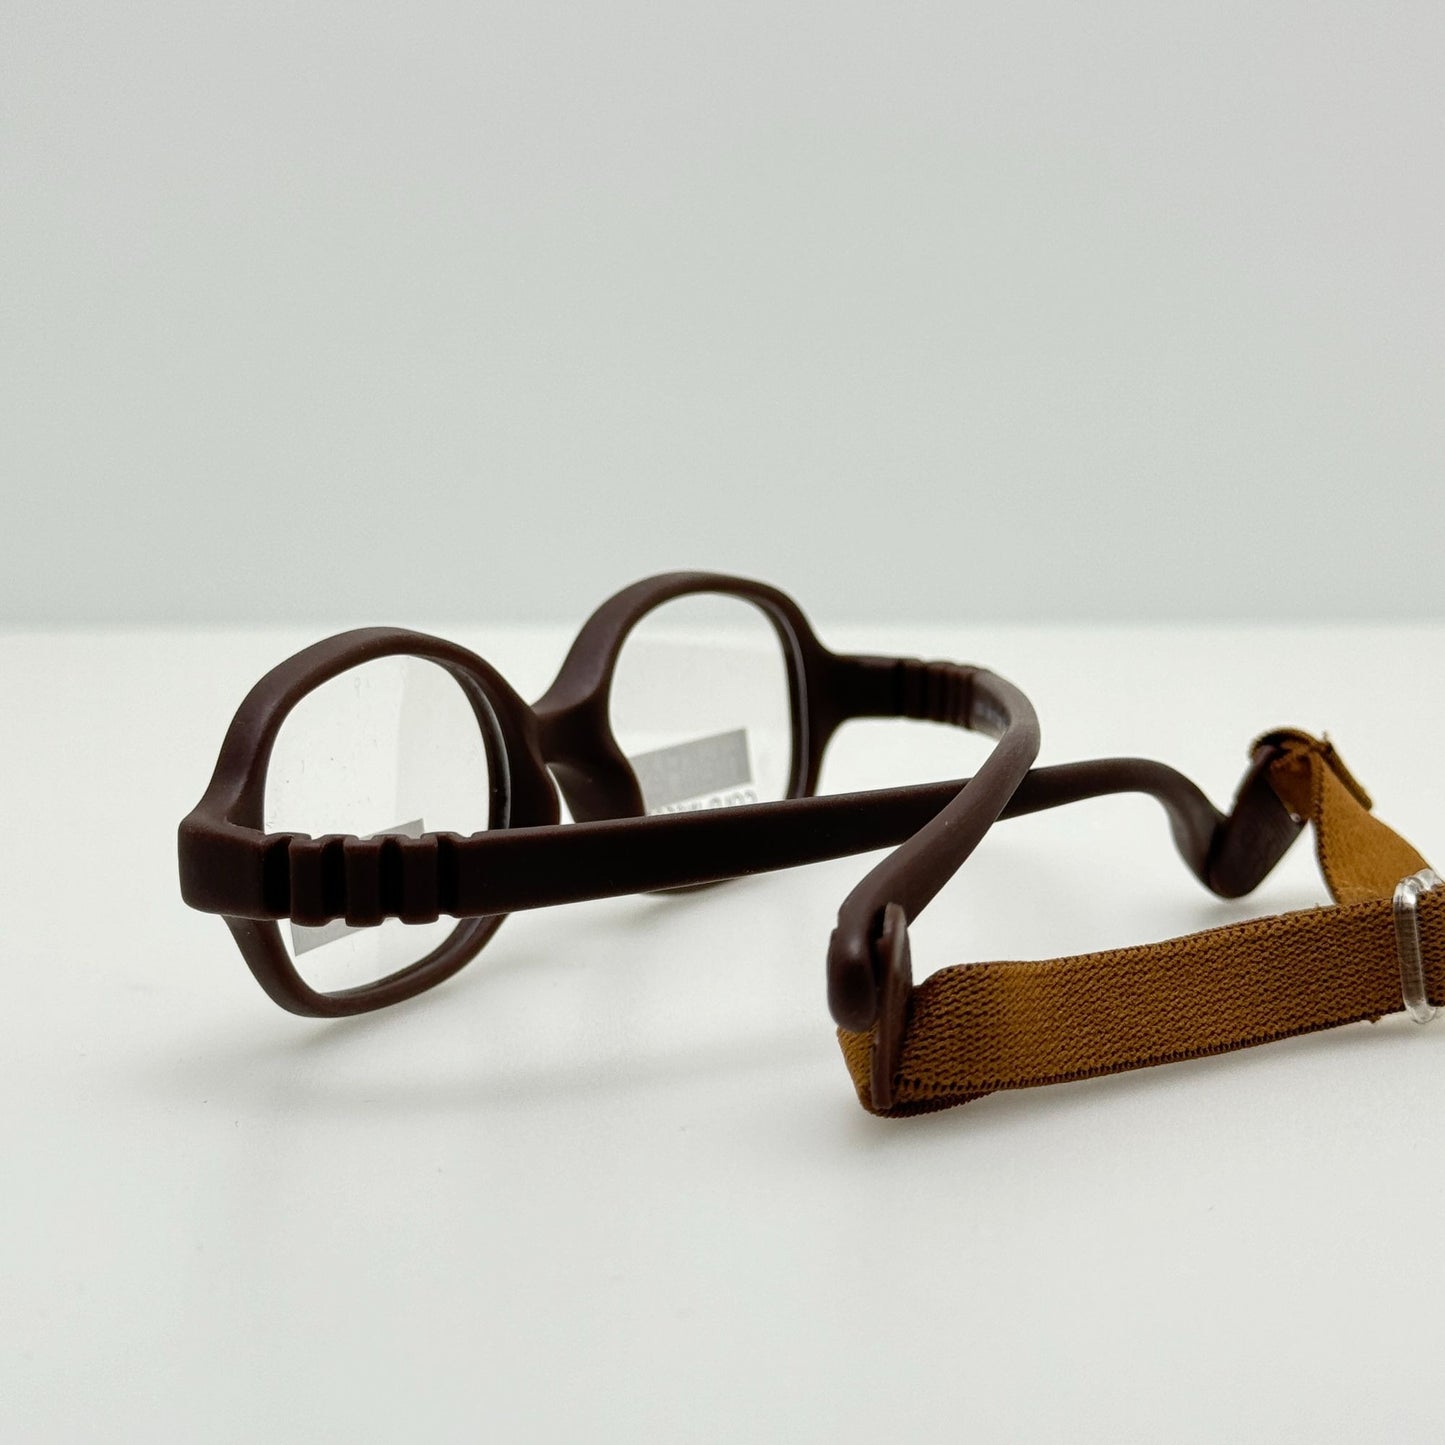 Dilli Dalli Eyeglasses Eye Glasses Frames Cuddles Chocolate 43-14-130